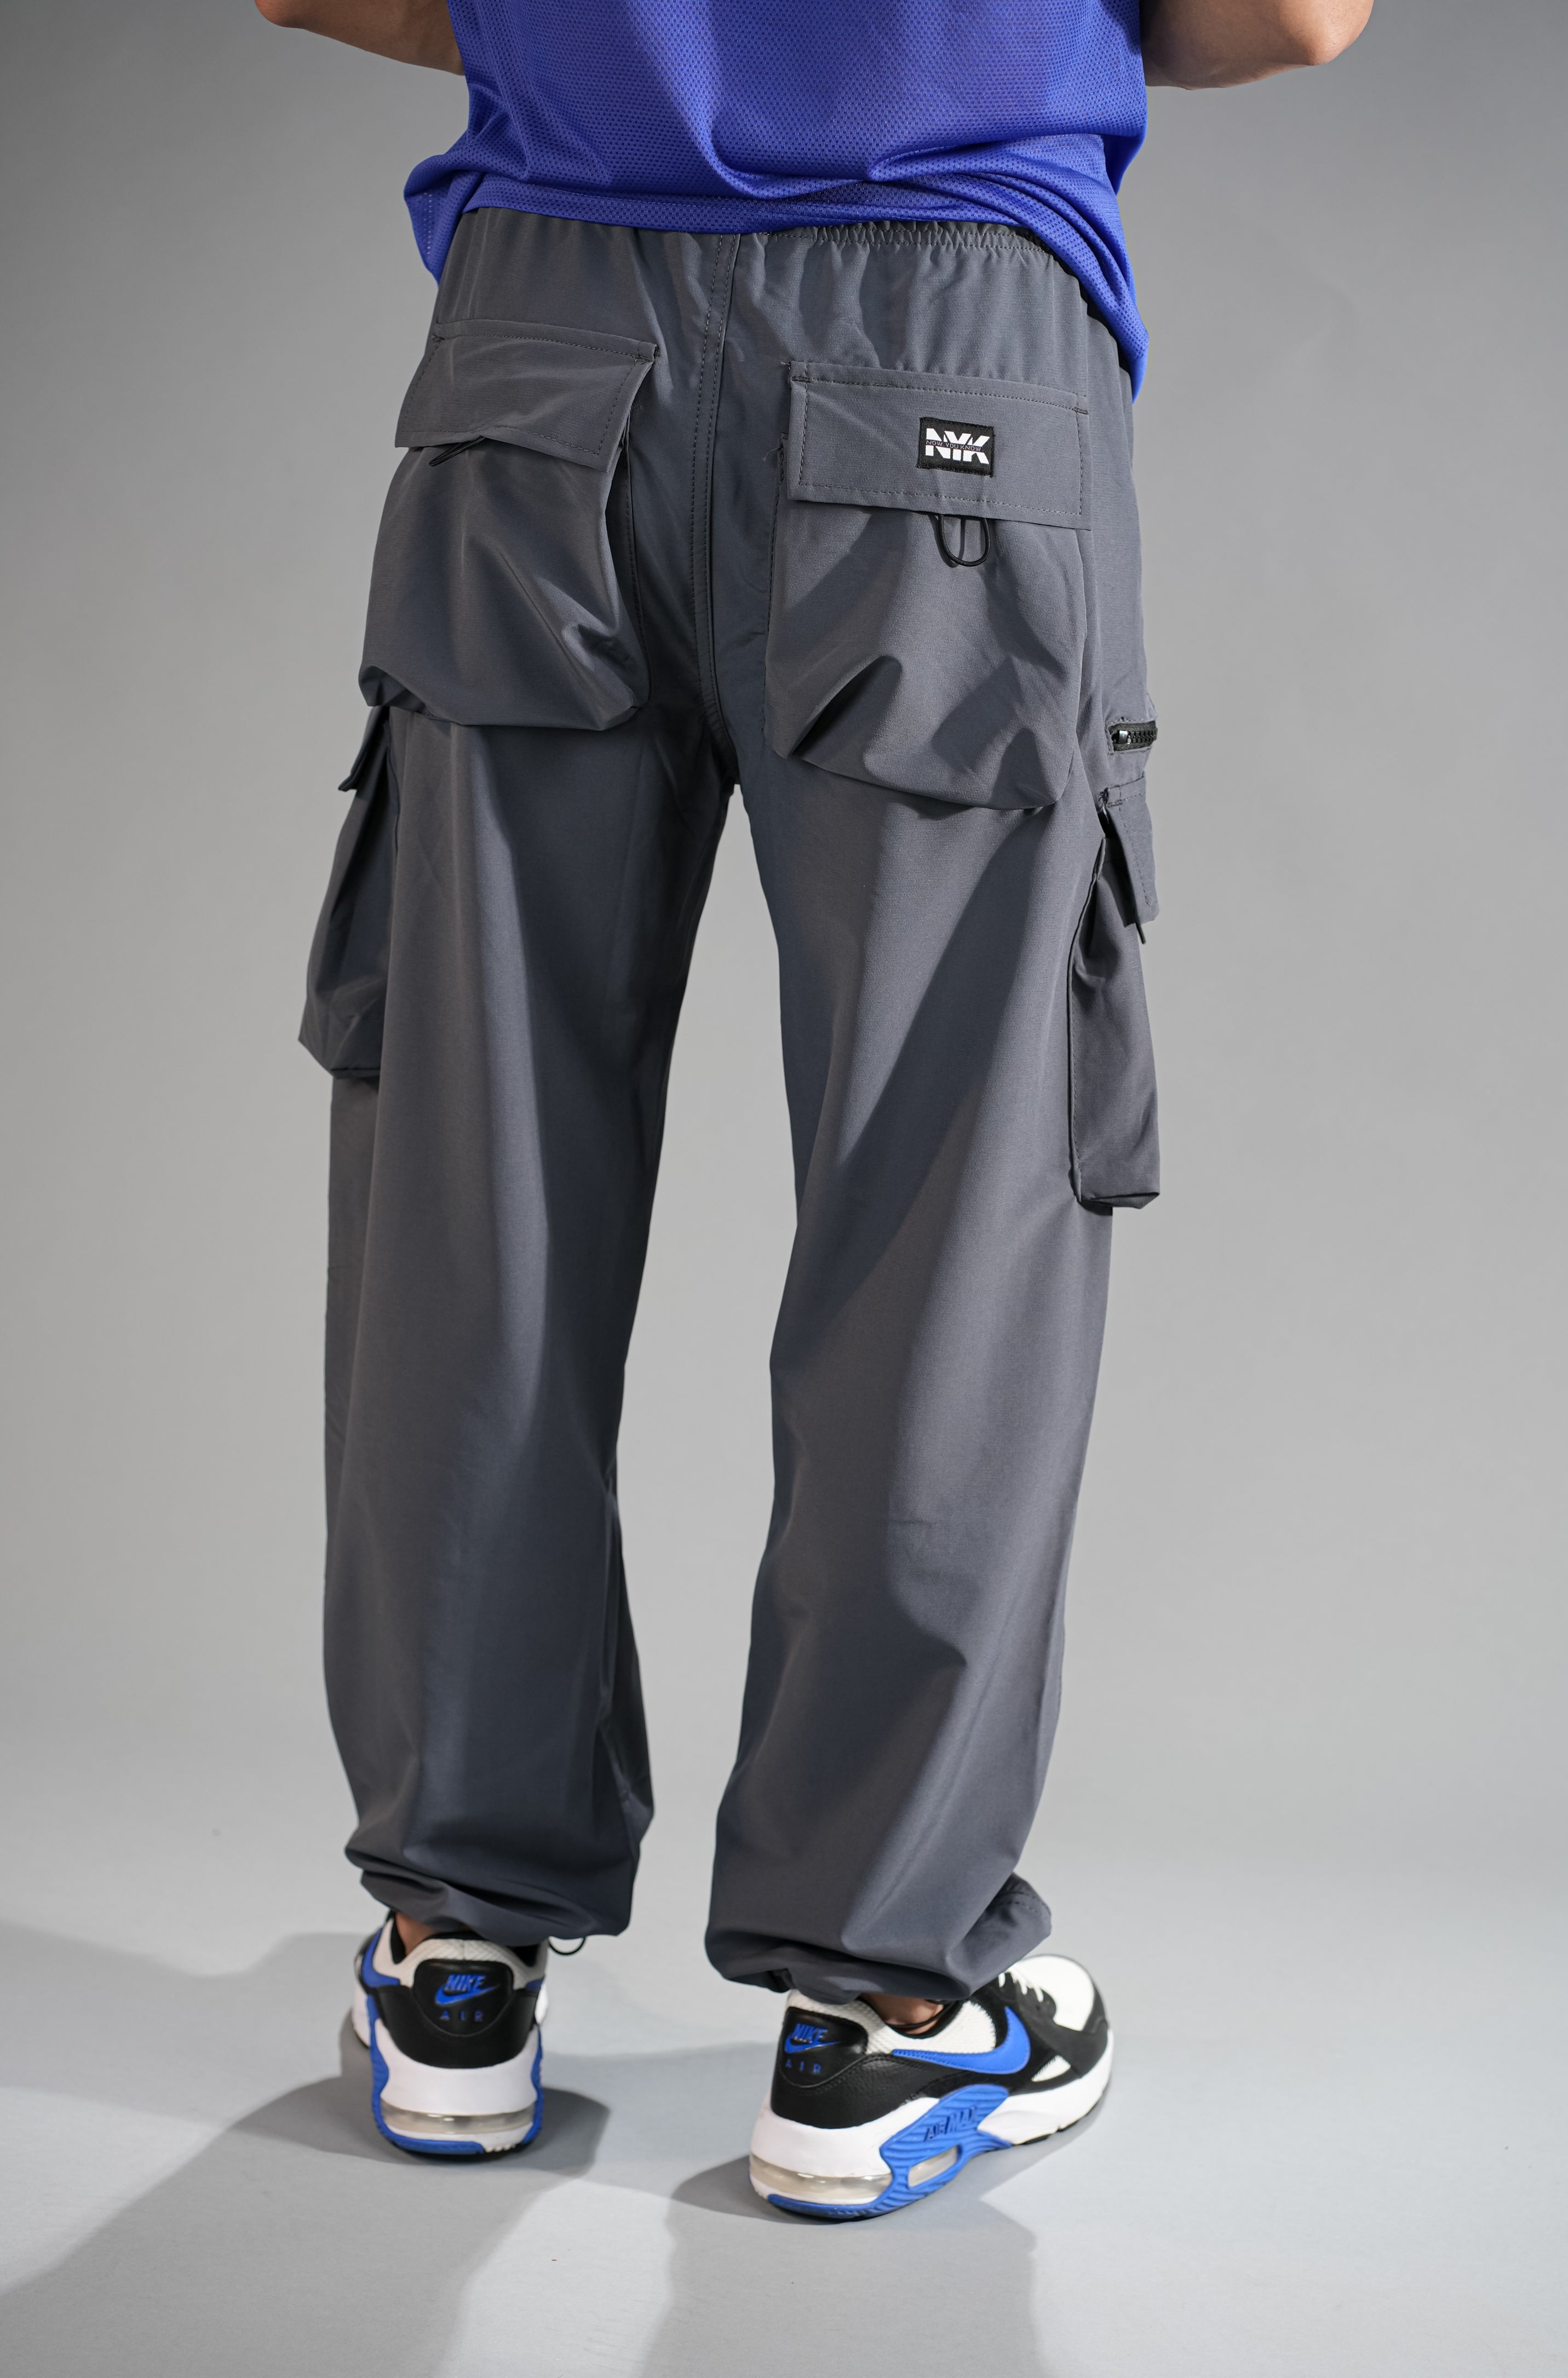 NYK Men's Millennium Cargo Pants